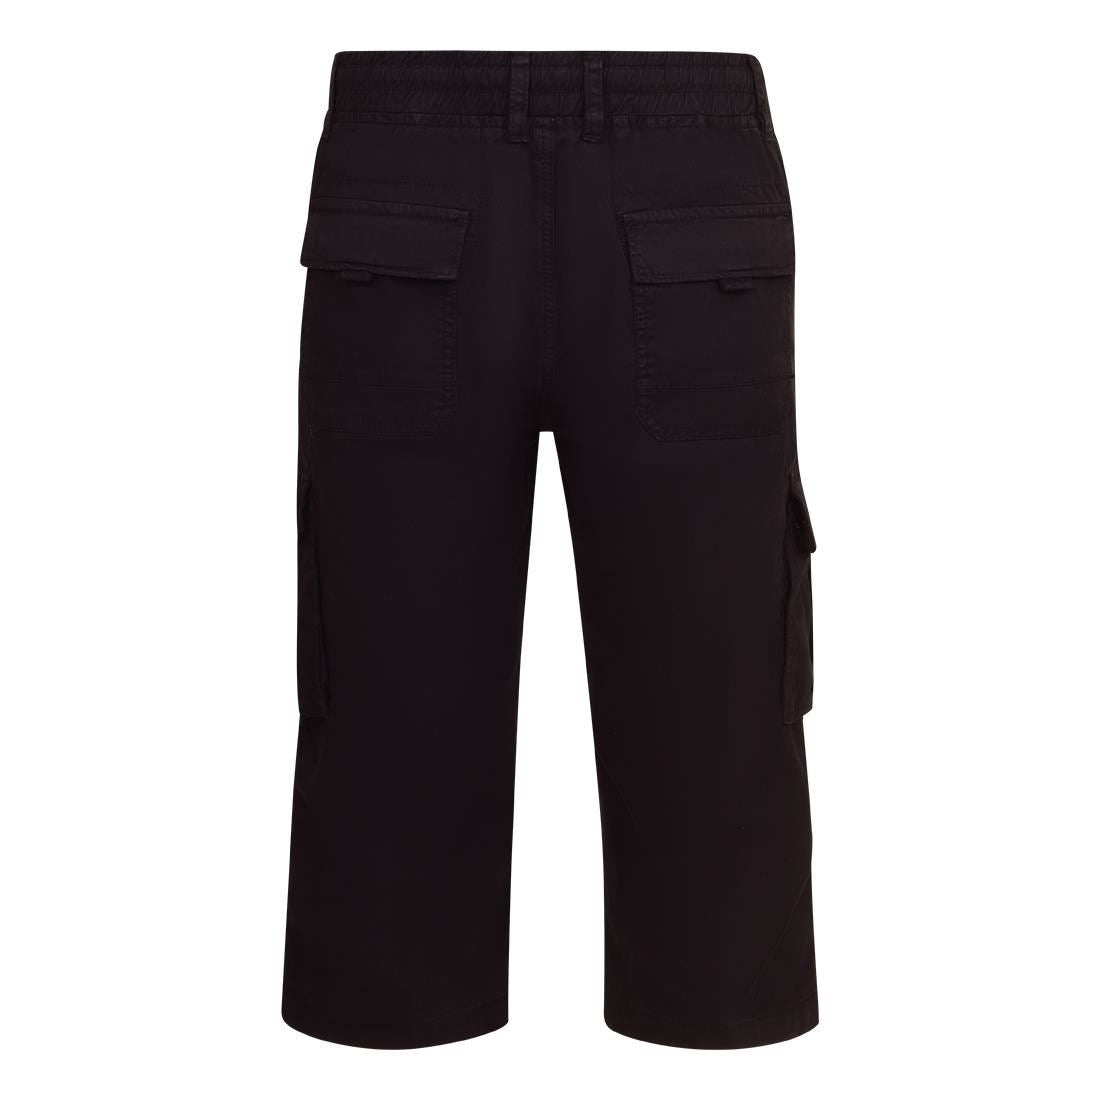 Mens High Quality 3/4 Long Summer Shorts Three Quarter Cargo Pockets Soft Cotton Pants Elasticated Waist Below the Knee Short